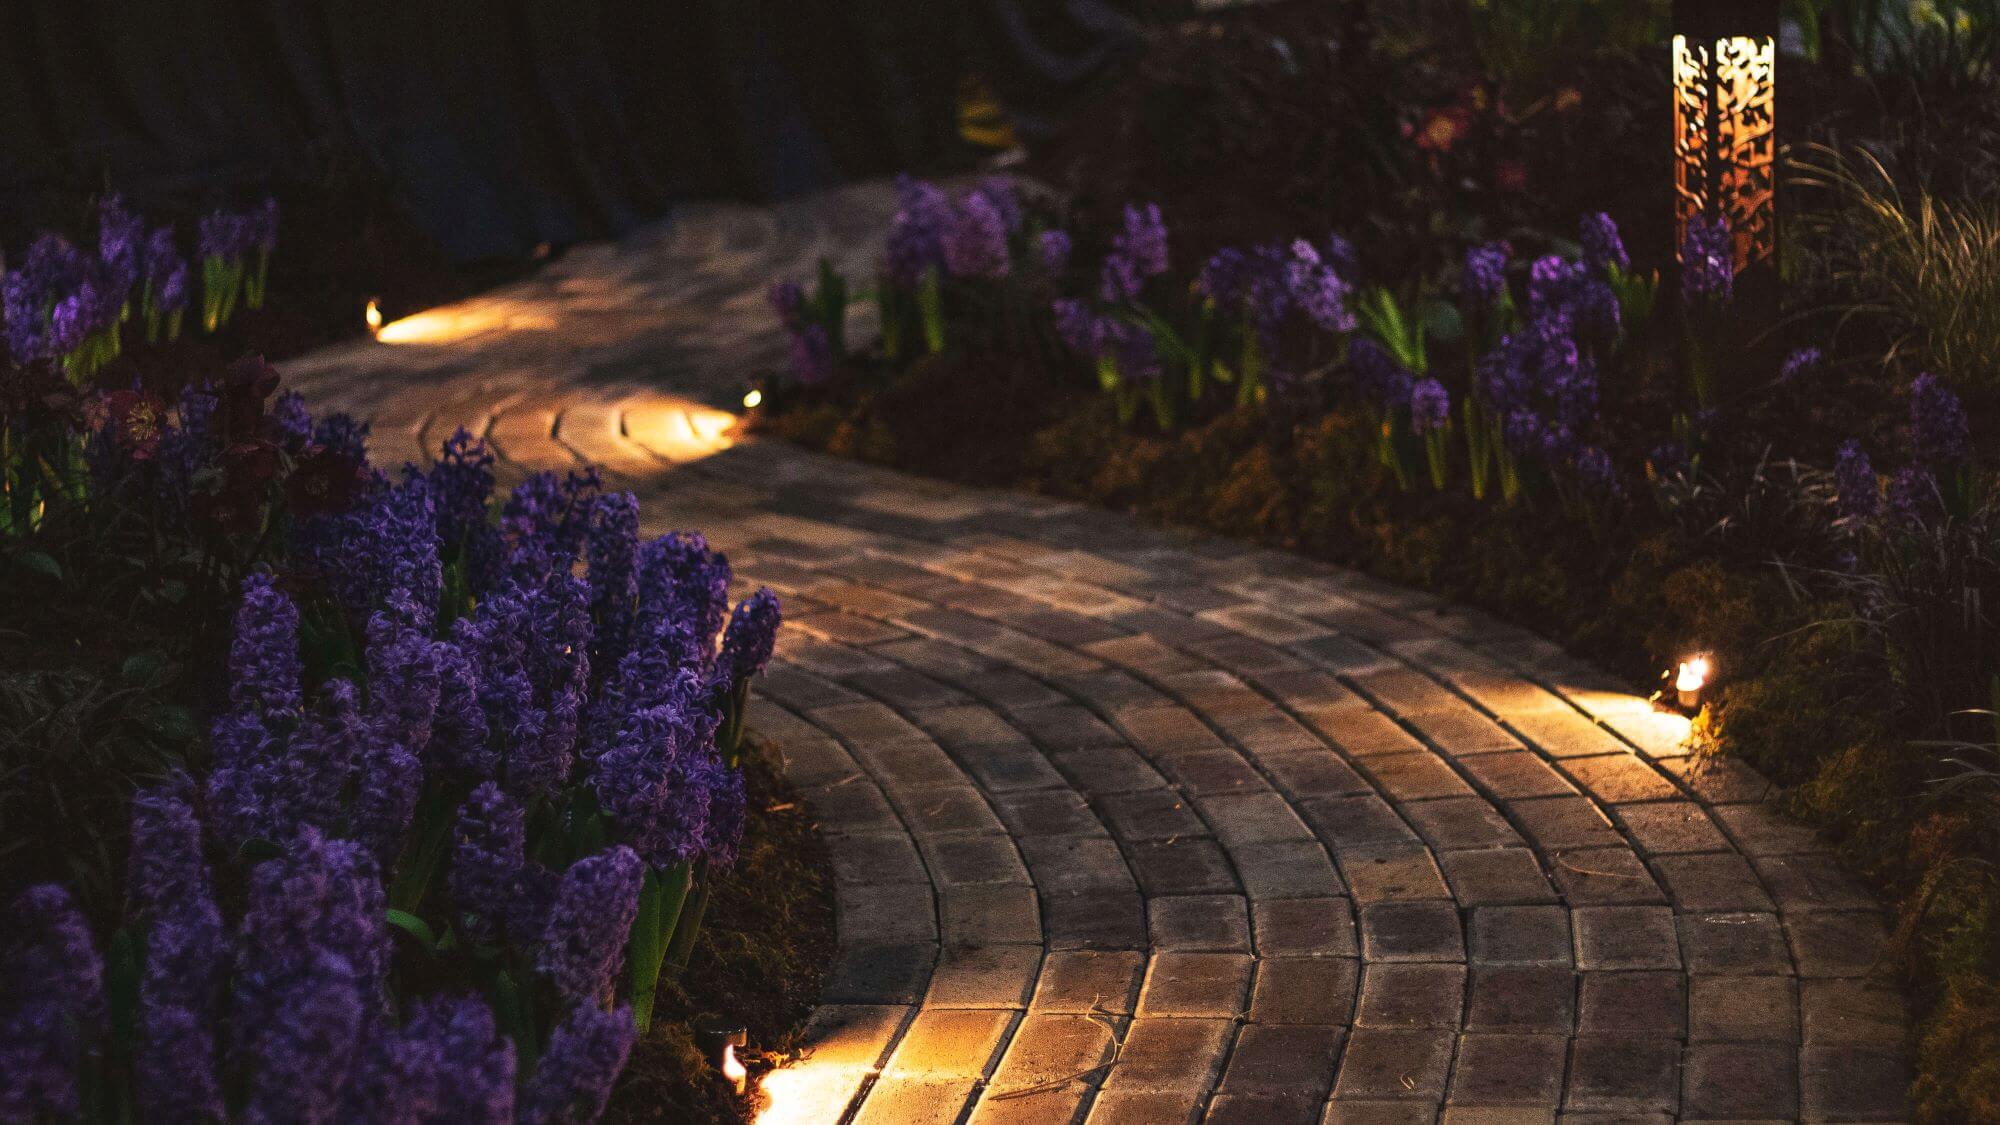 brickwork garden path illuminated by night